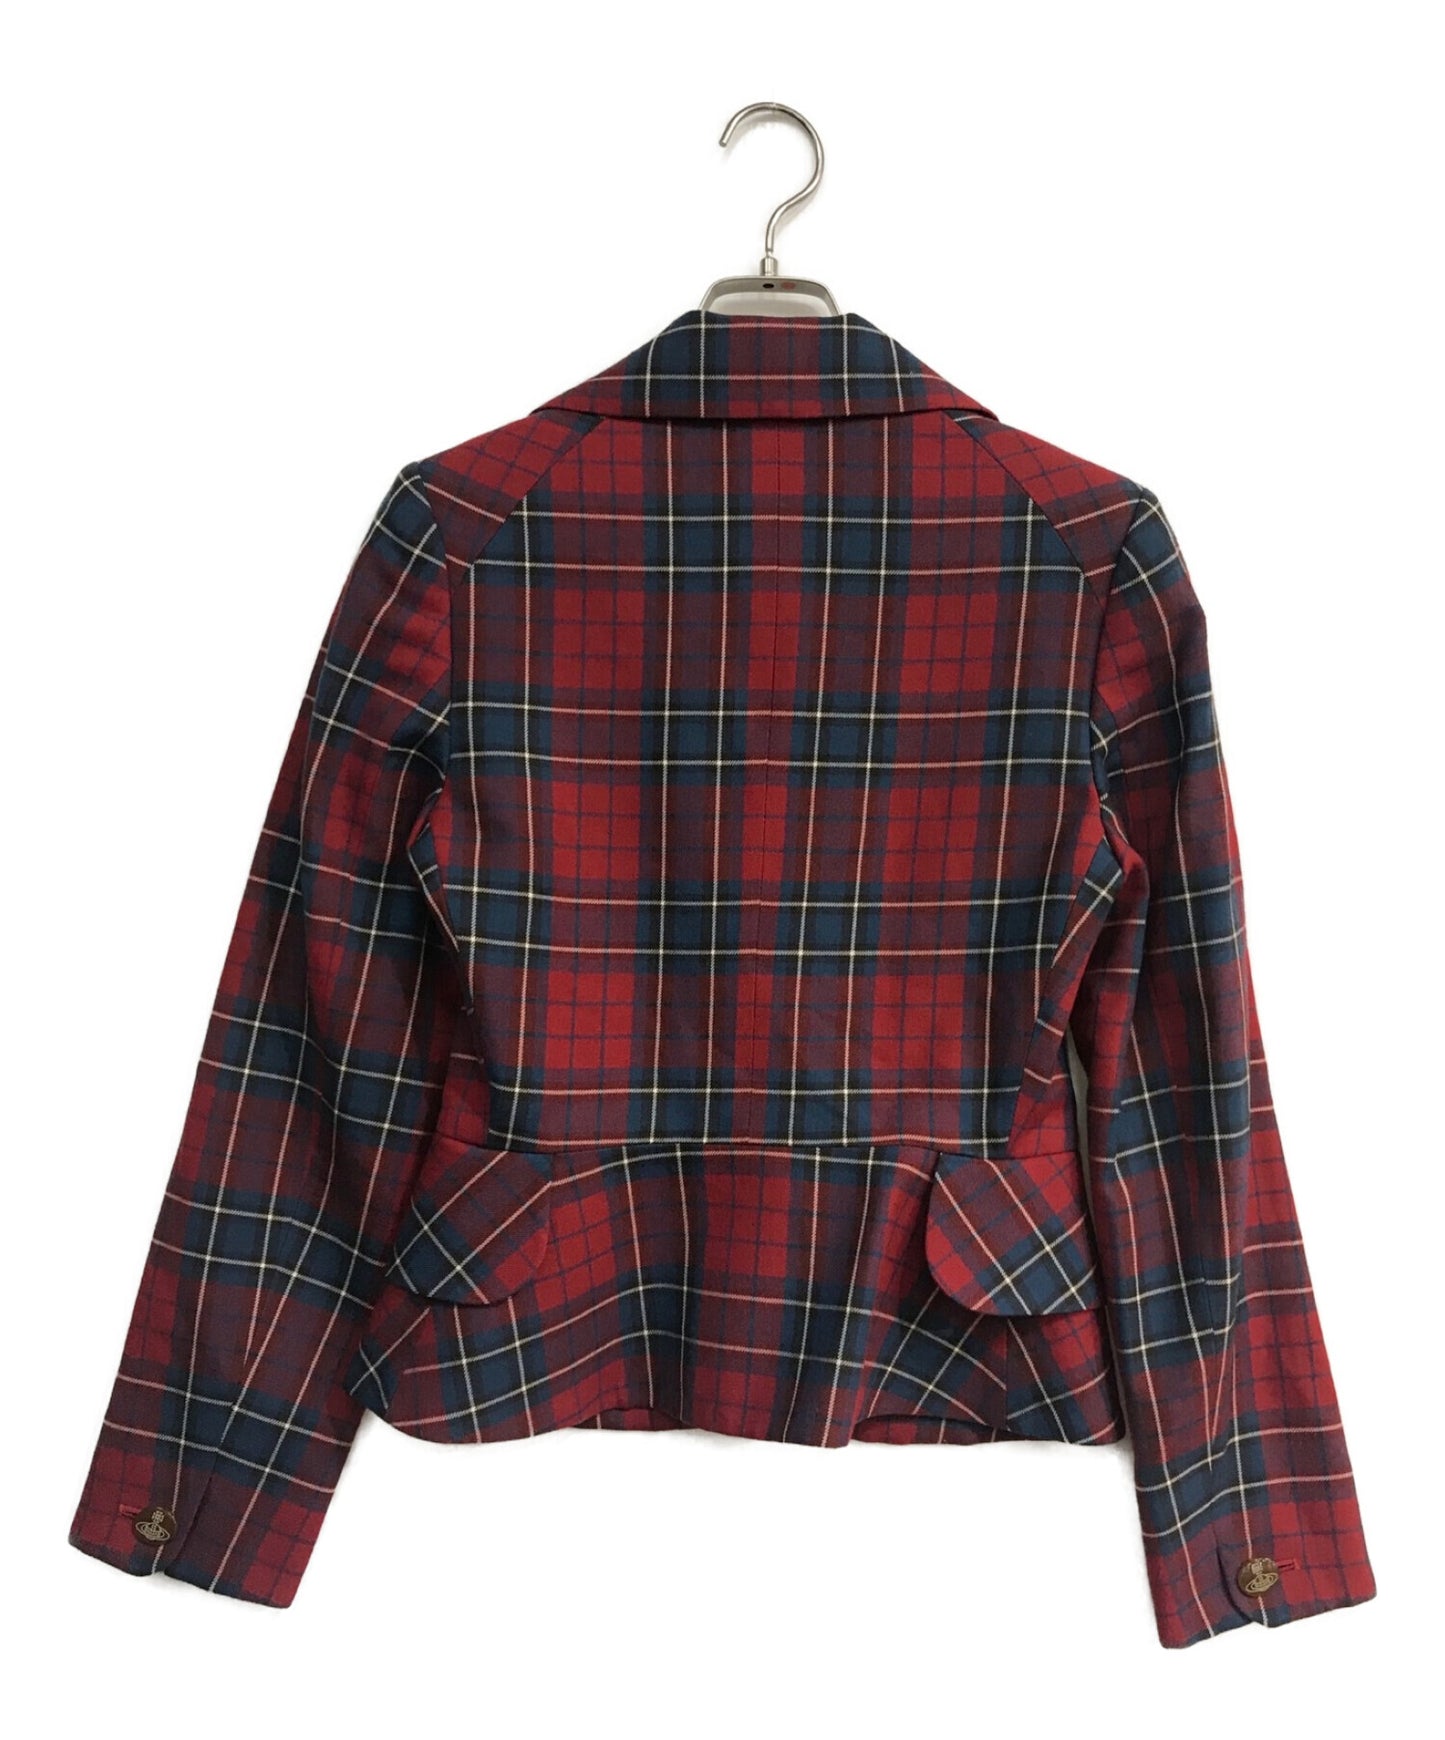 Vivienne Westwood RED LABEL Tartan plaid love jacket 16-01-452005 16-01-452005